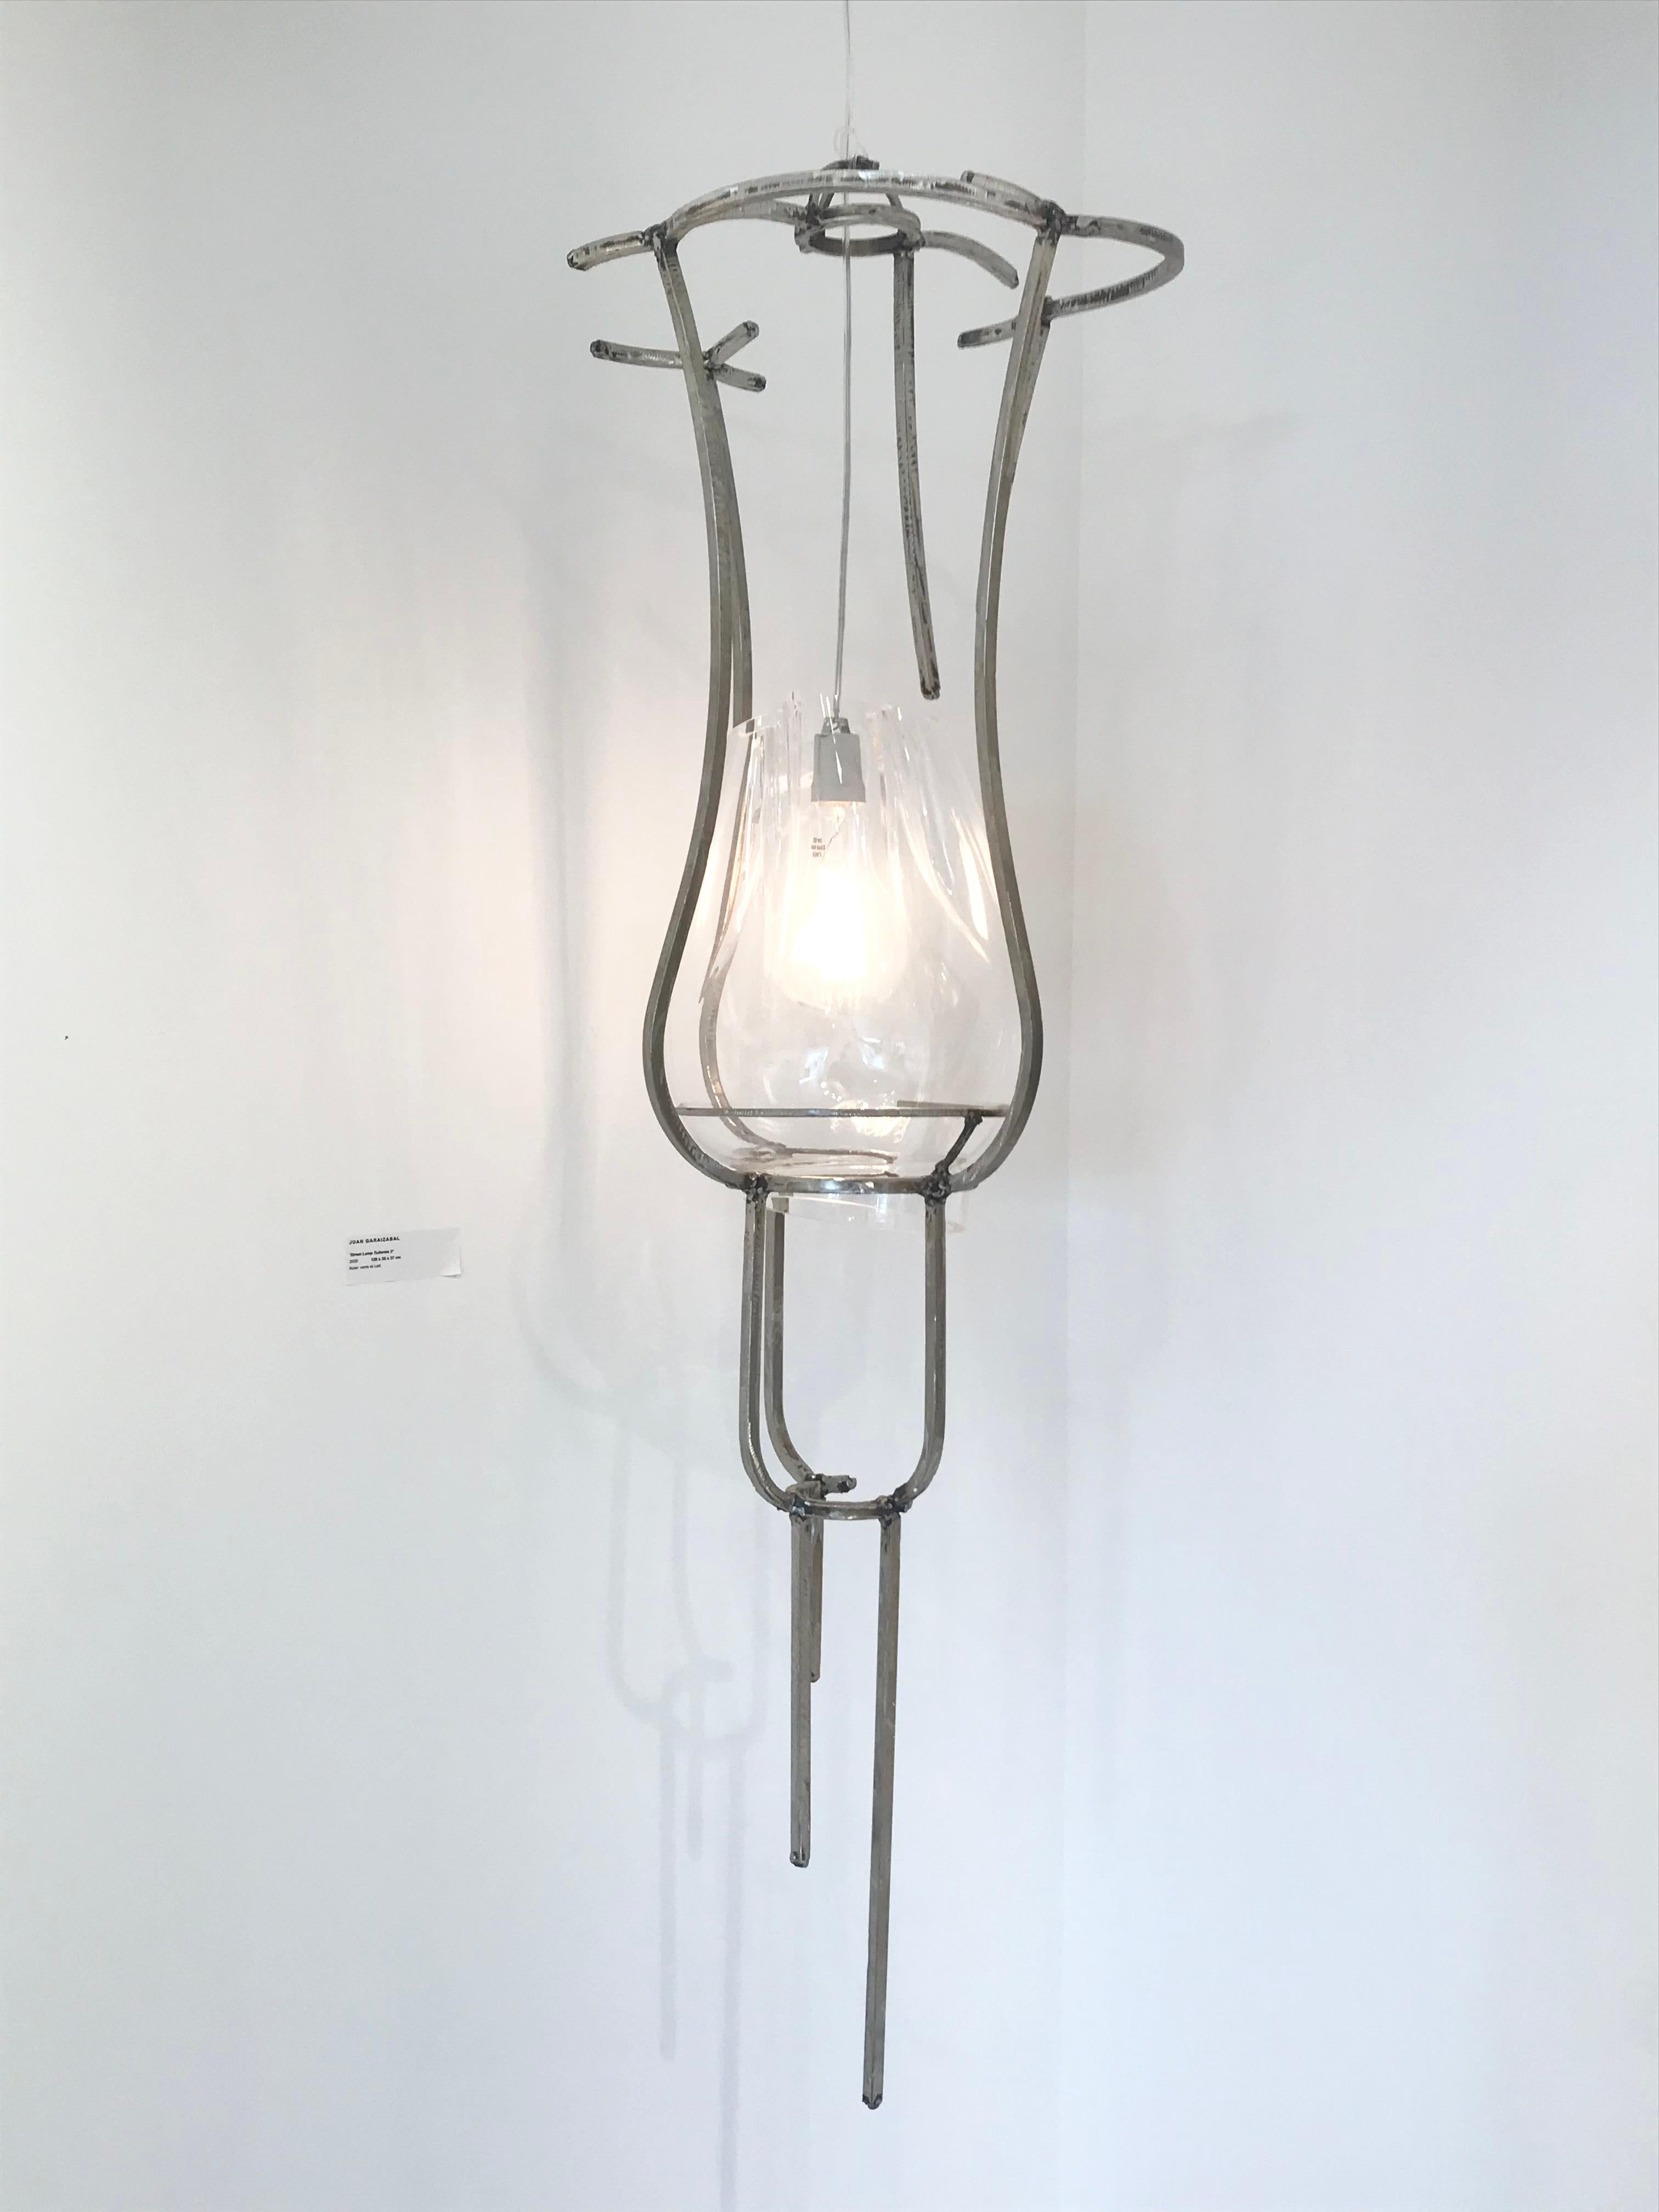 Juan Garaizabal Abstract Sculpture - Street Lamp Tuileries 2